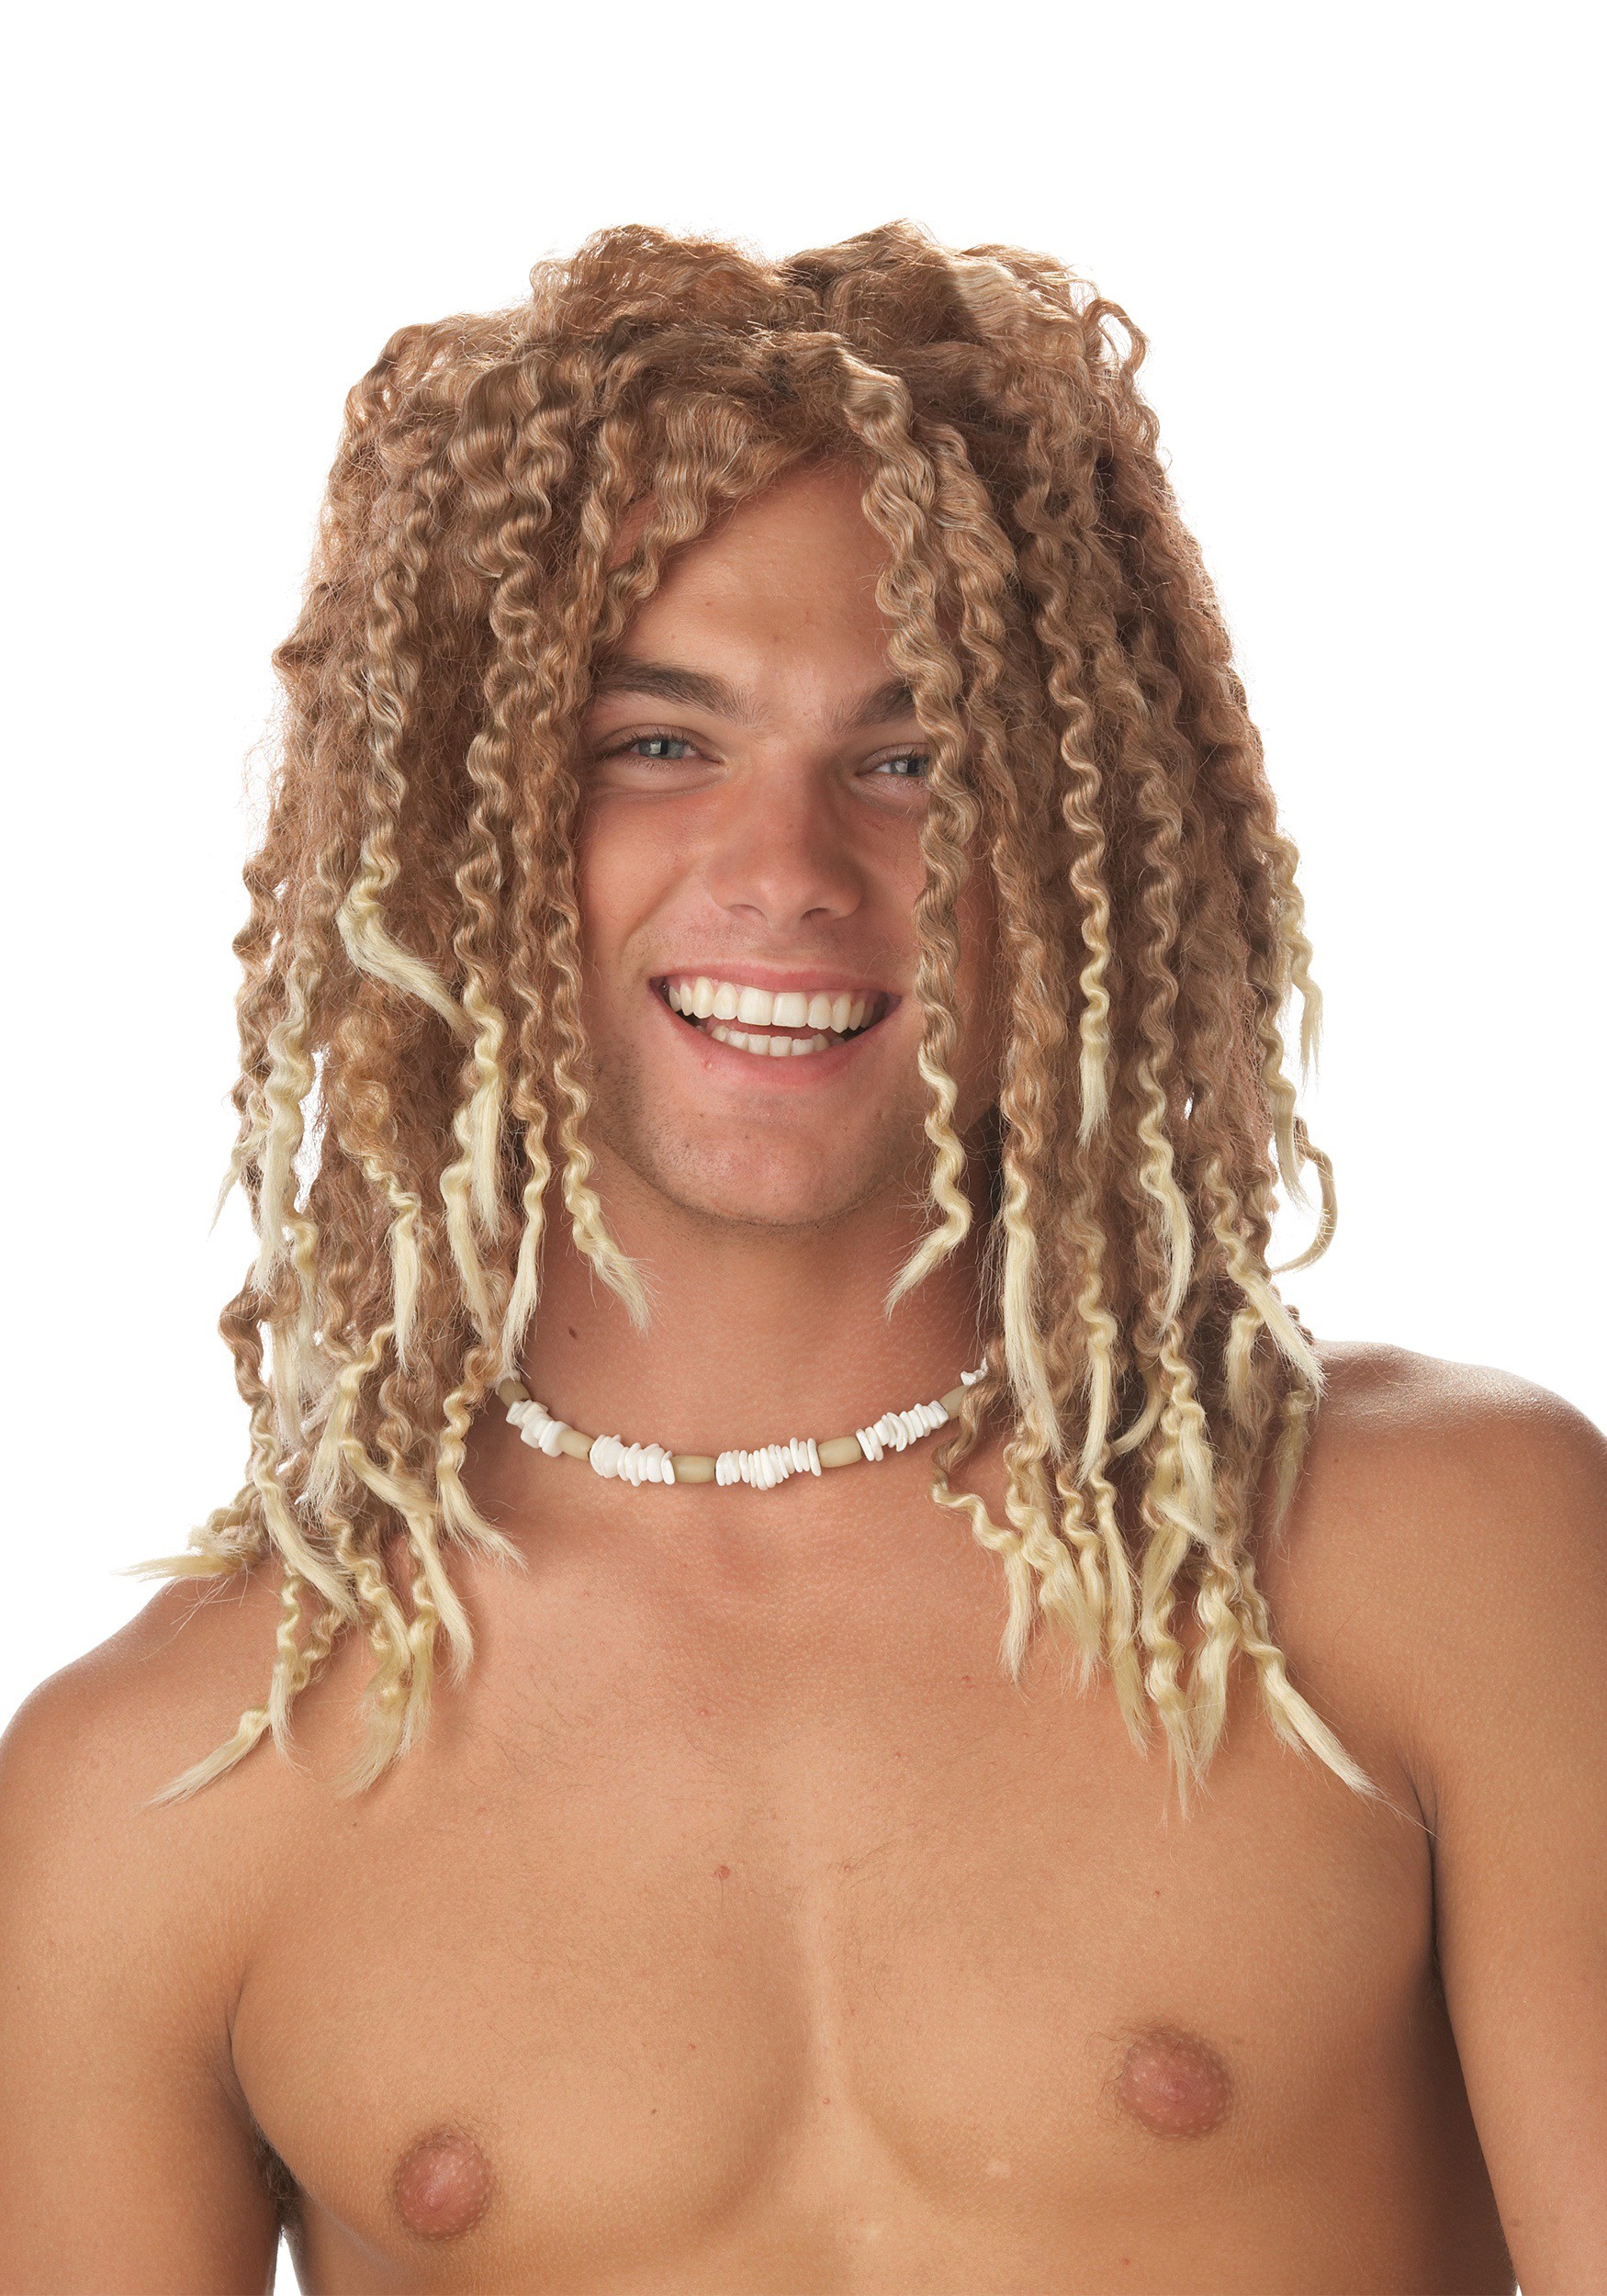 Men's Beach Bum Blonde Wig